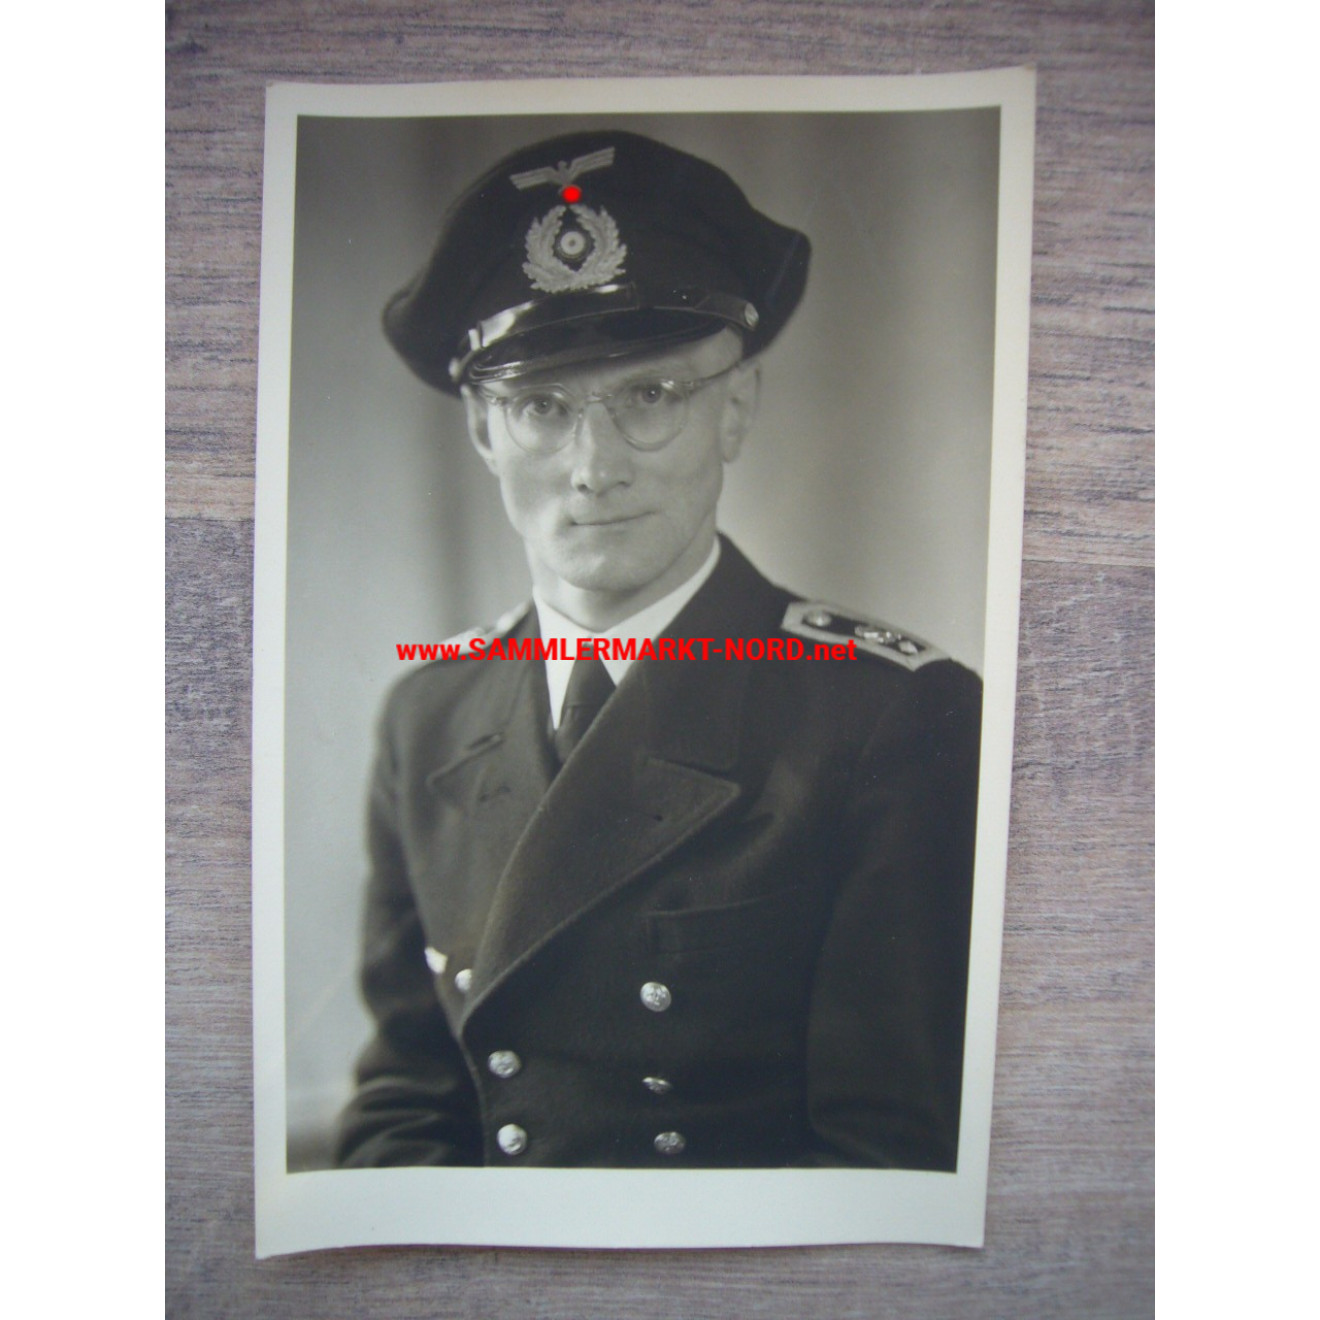 Kriegsmarine officer with visor cap 1944